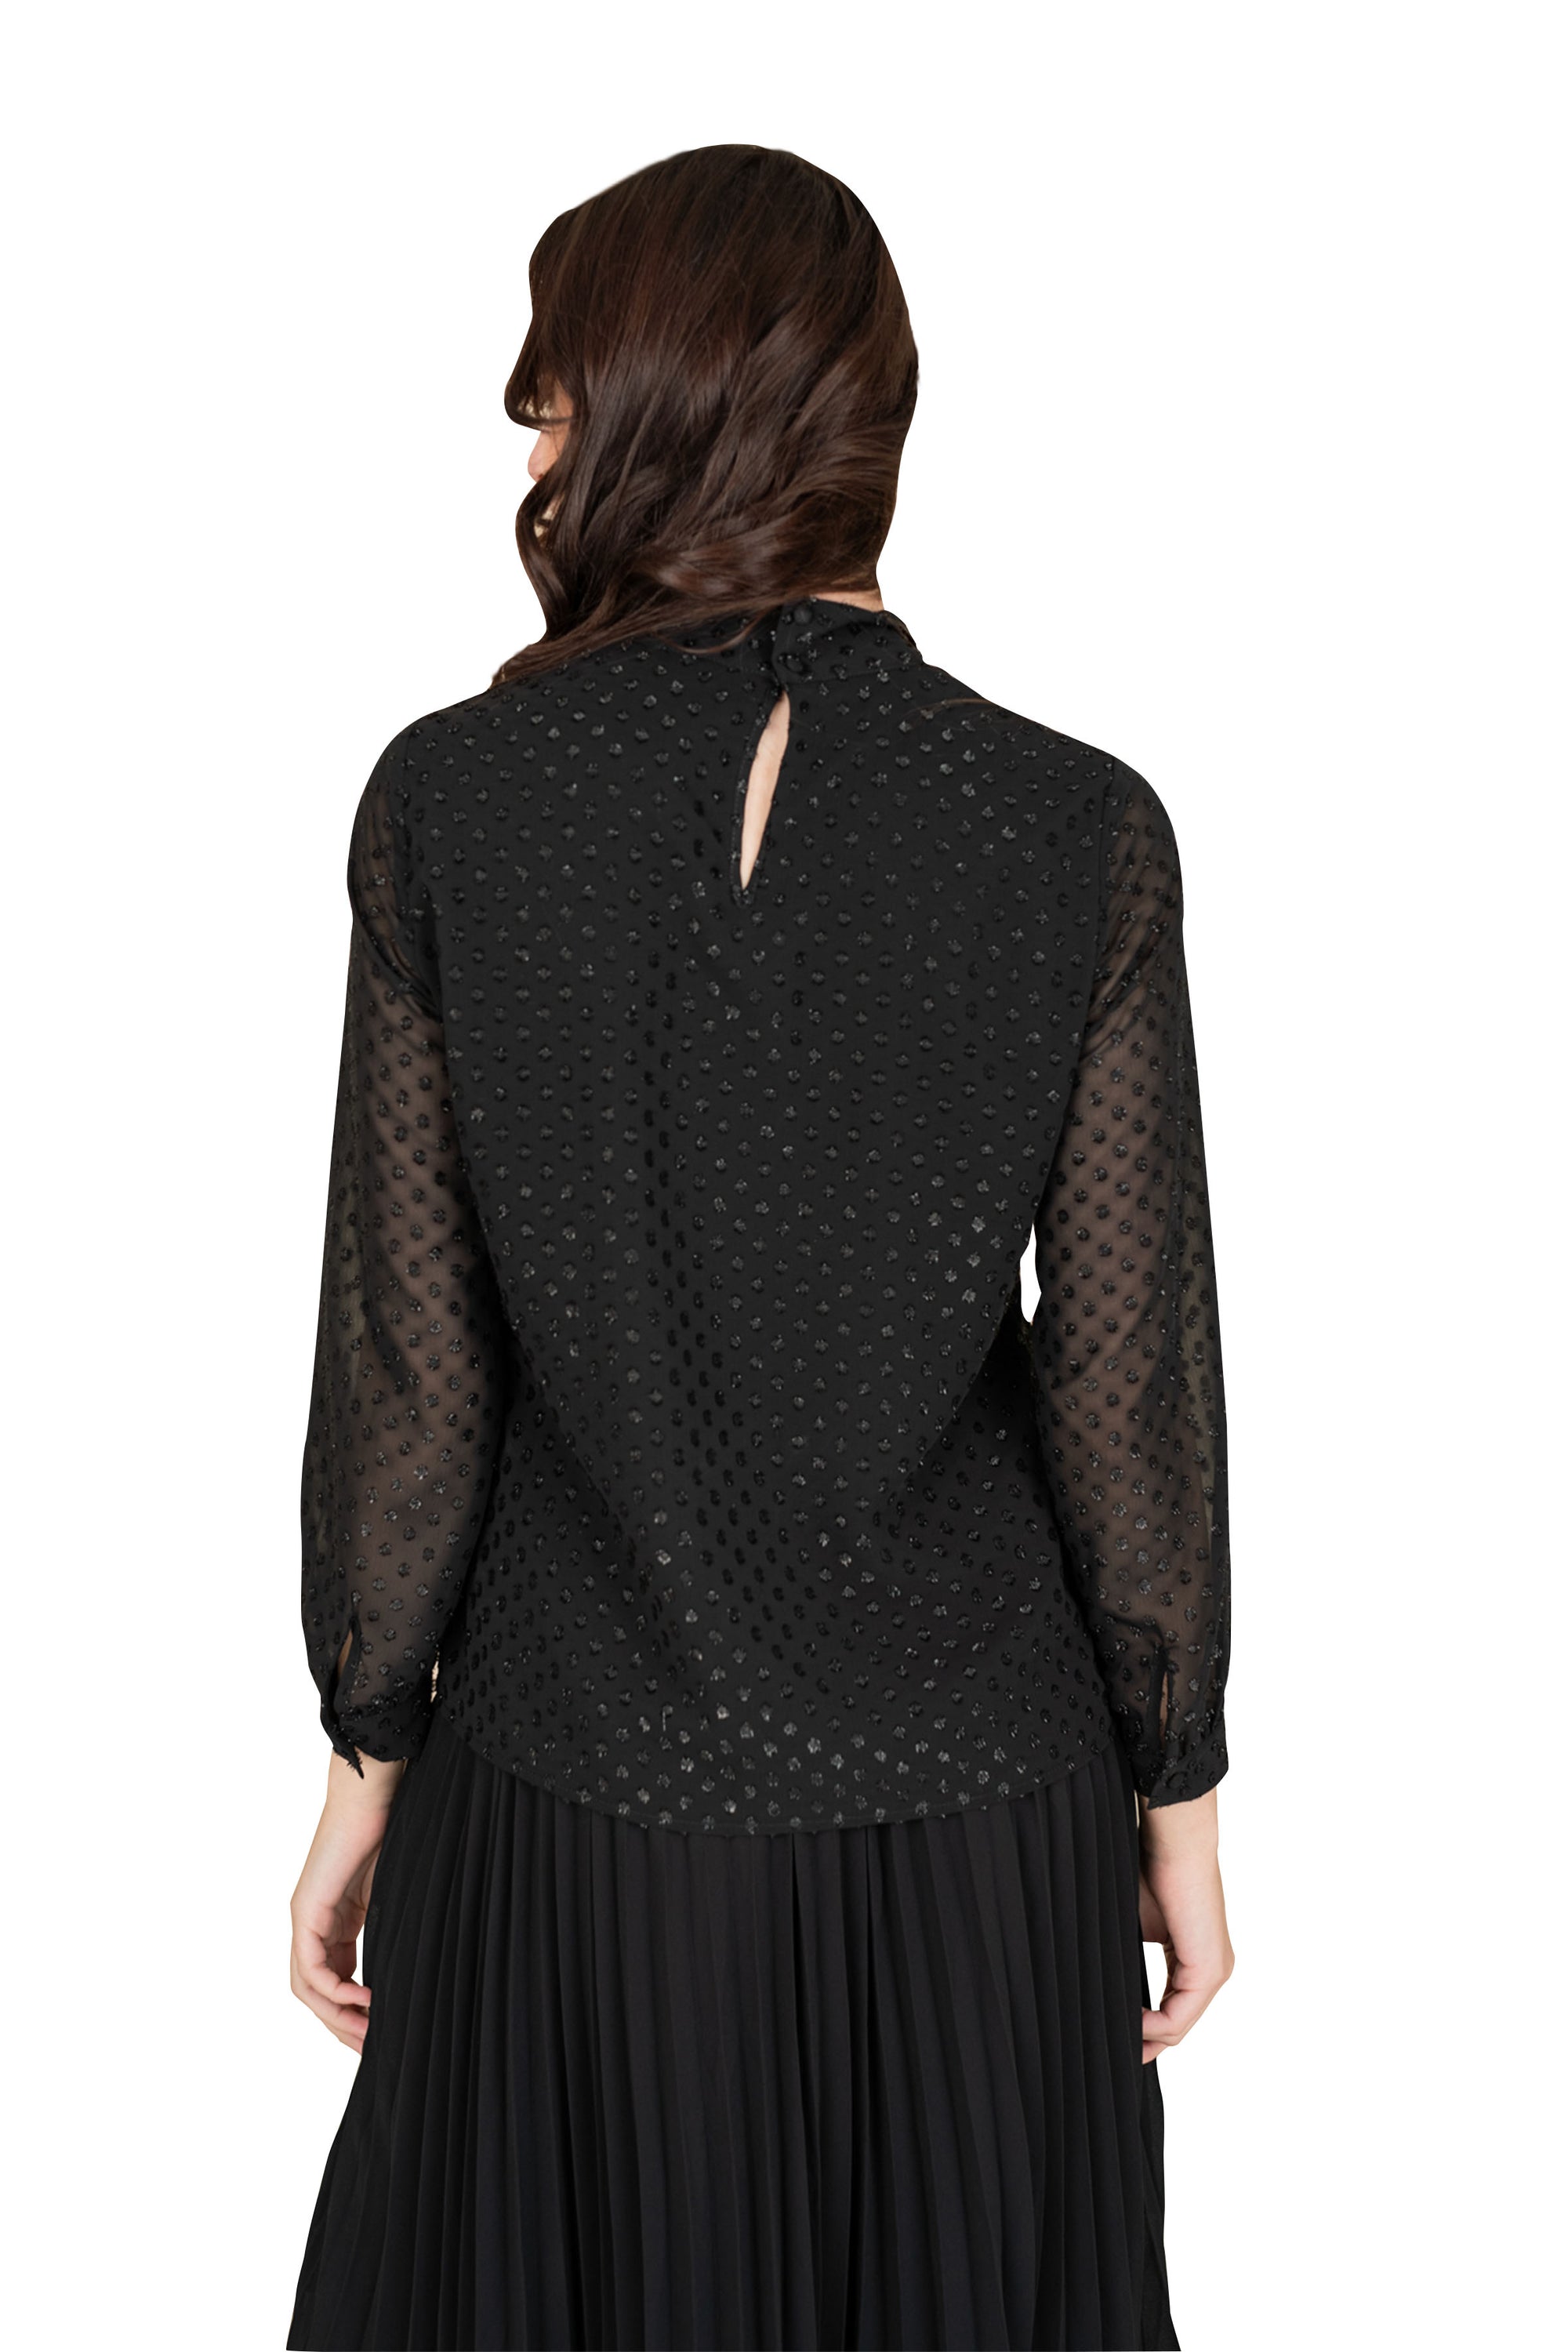 black formal blouse